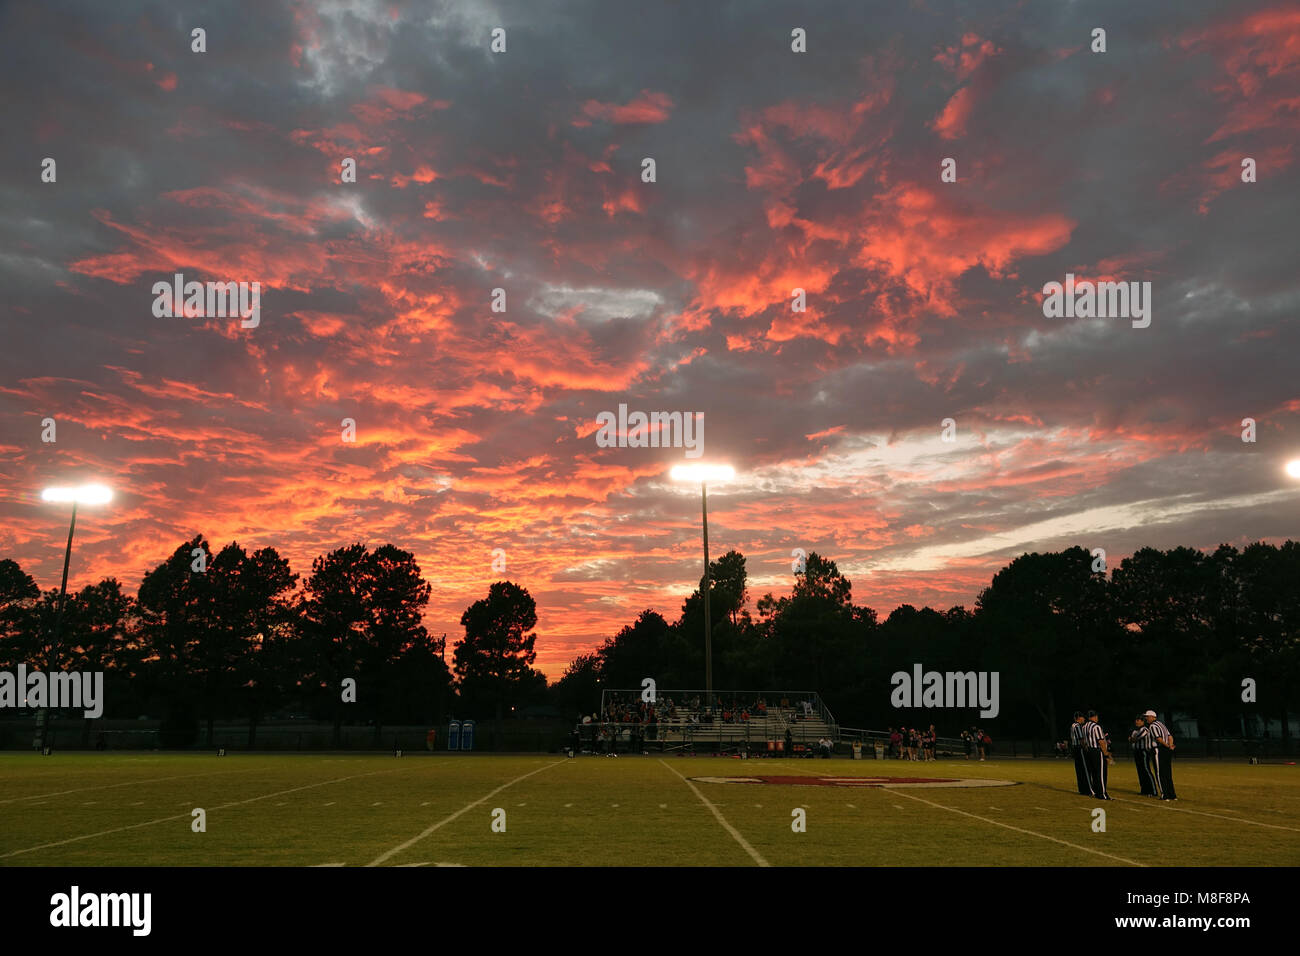 Friday night football at sunset under the stadium lights. Stock Photo